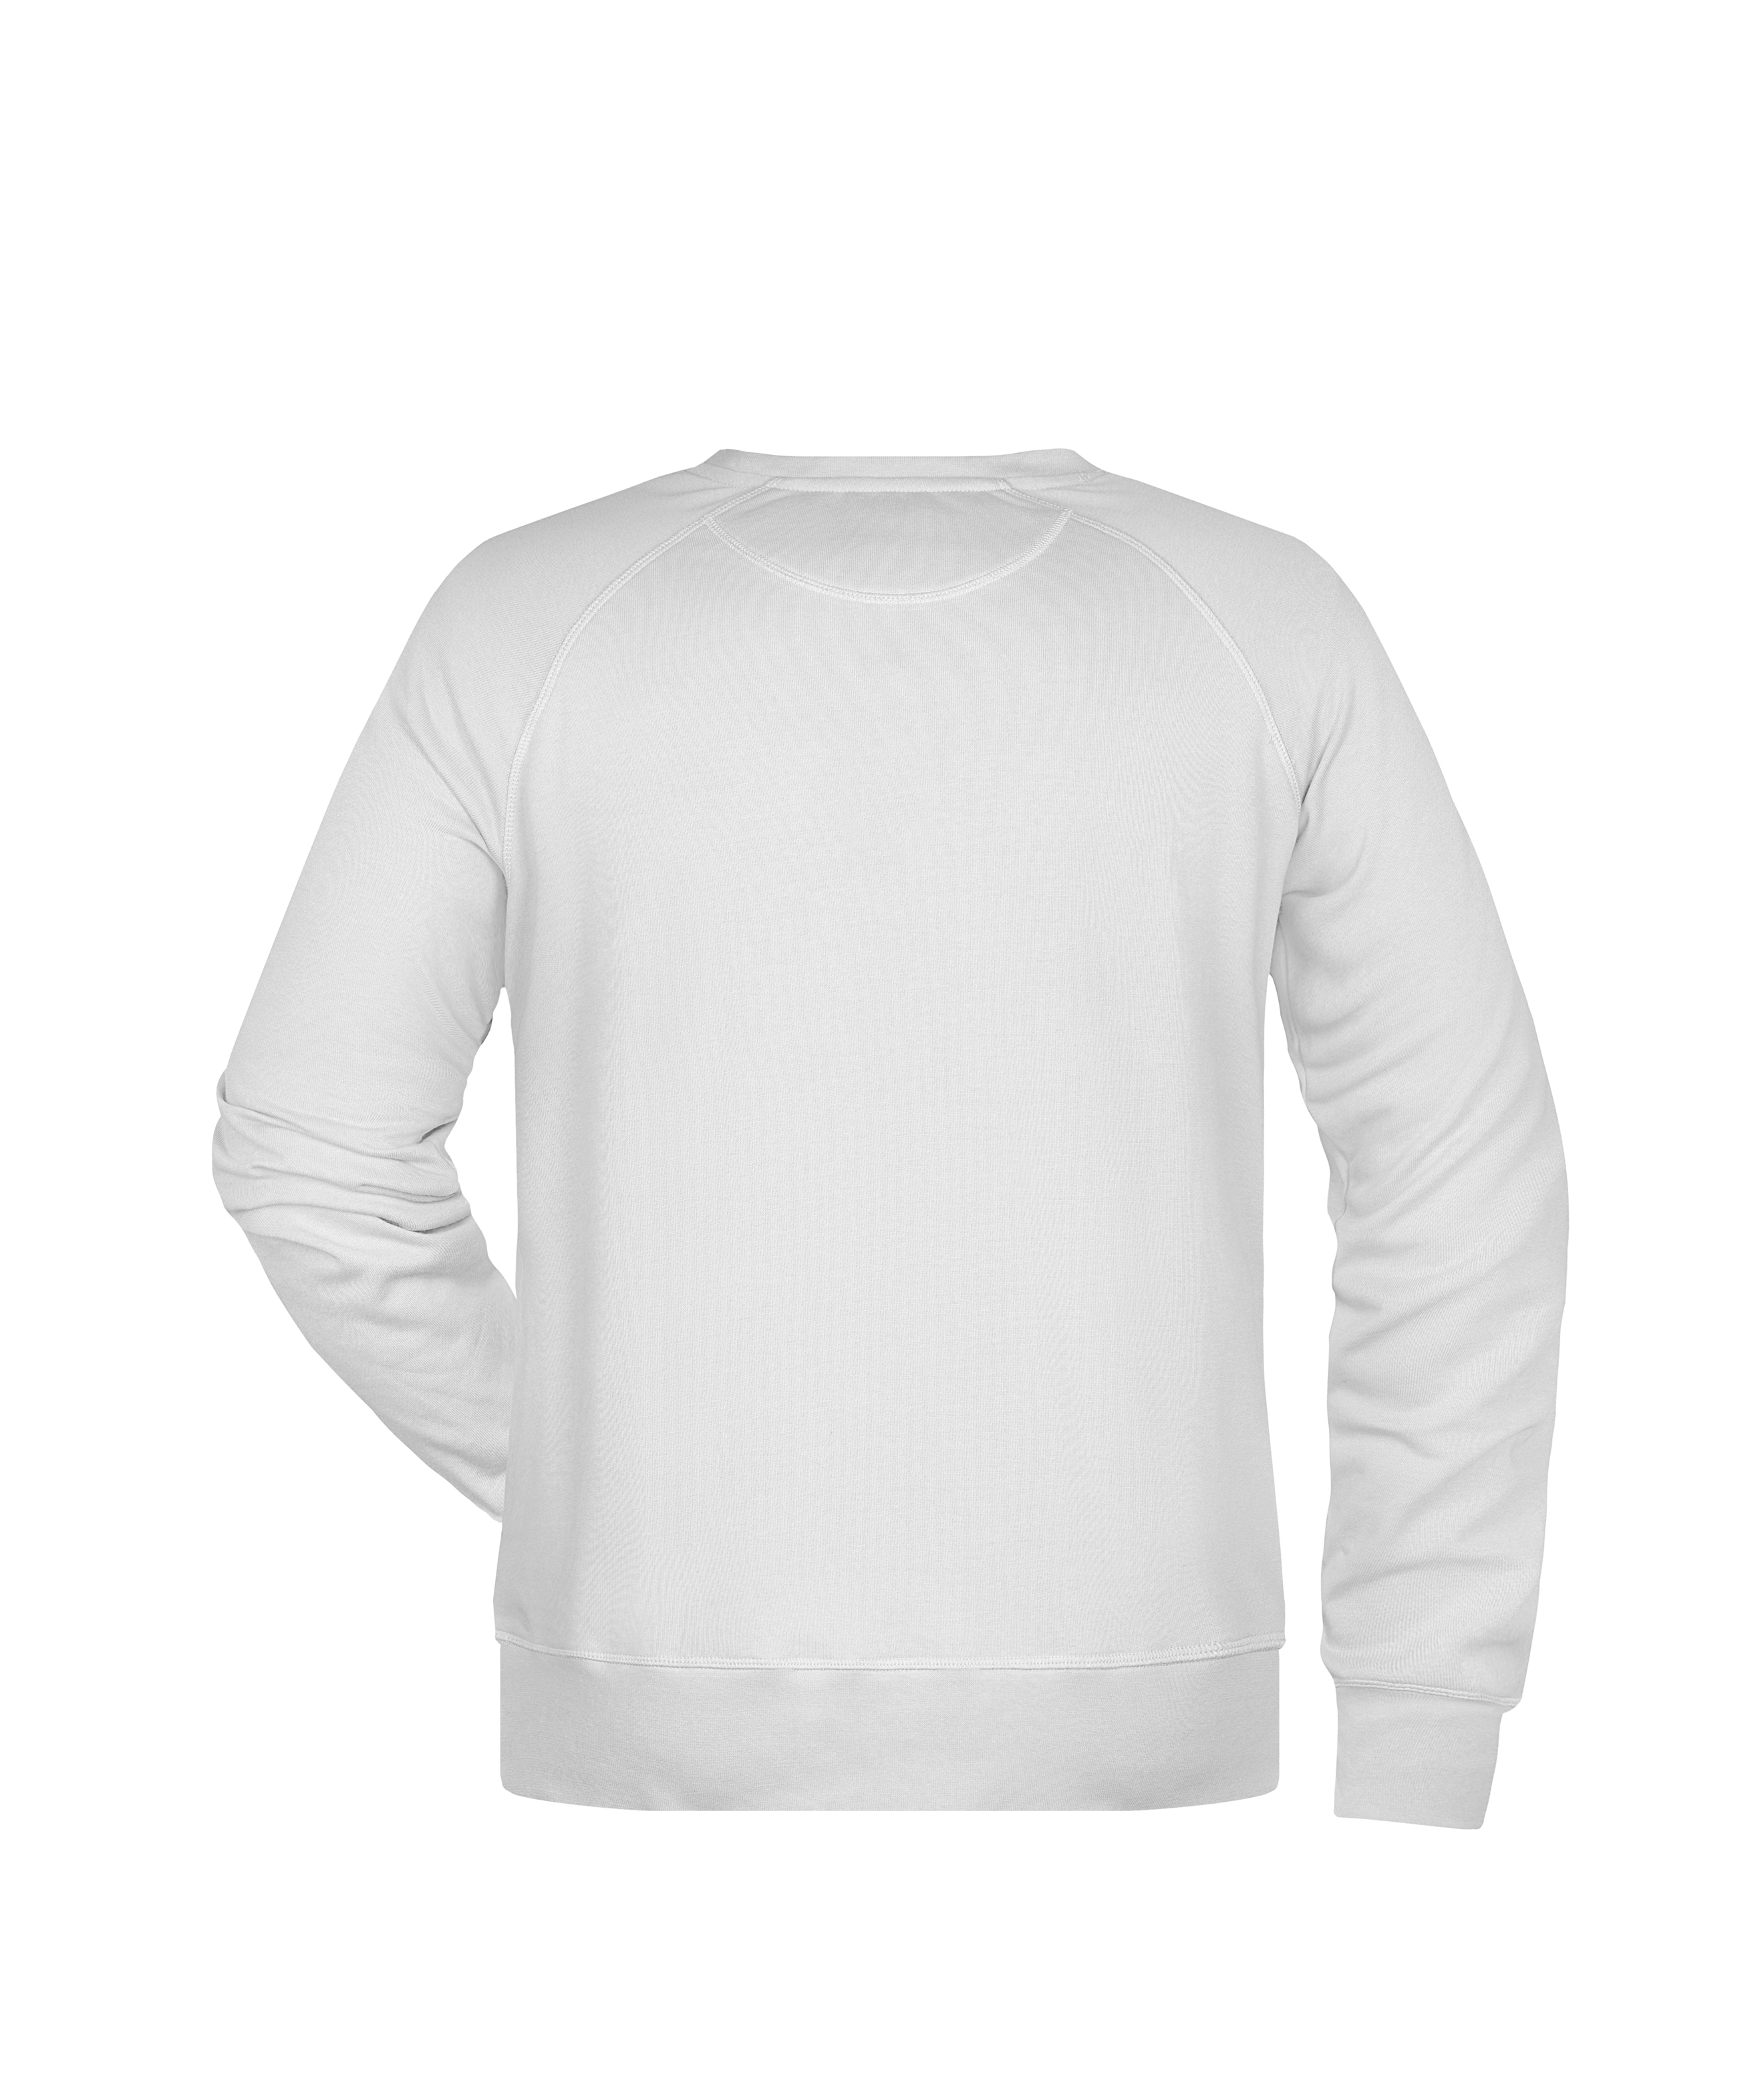 Men's Sweat 8022 Klassisches Sweatshirt mit Raglanärmeln